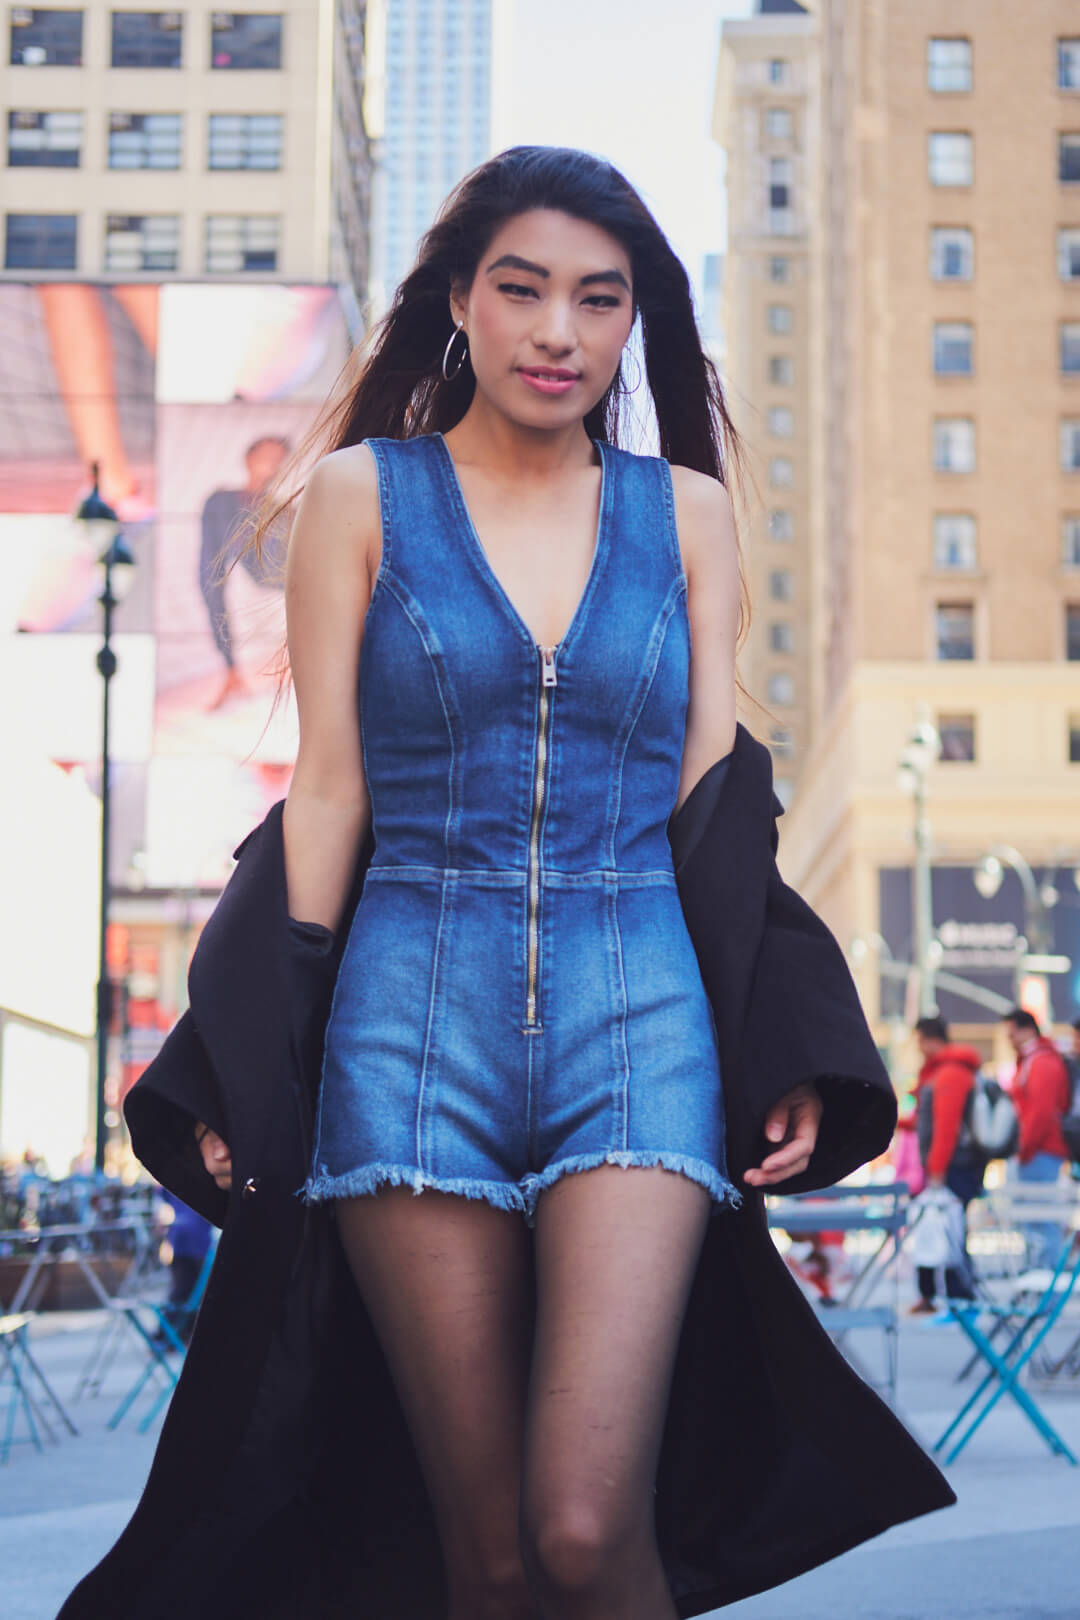 Rinzin - Women's Fashion Photography - Lifestyle Blogger Photography - Madison Square Garden, New York